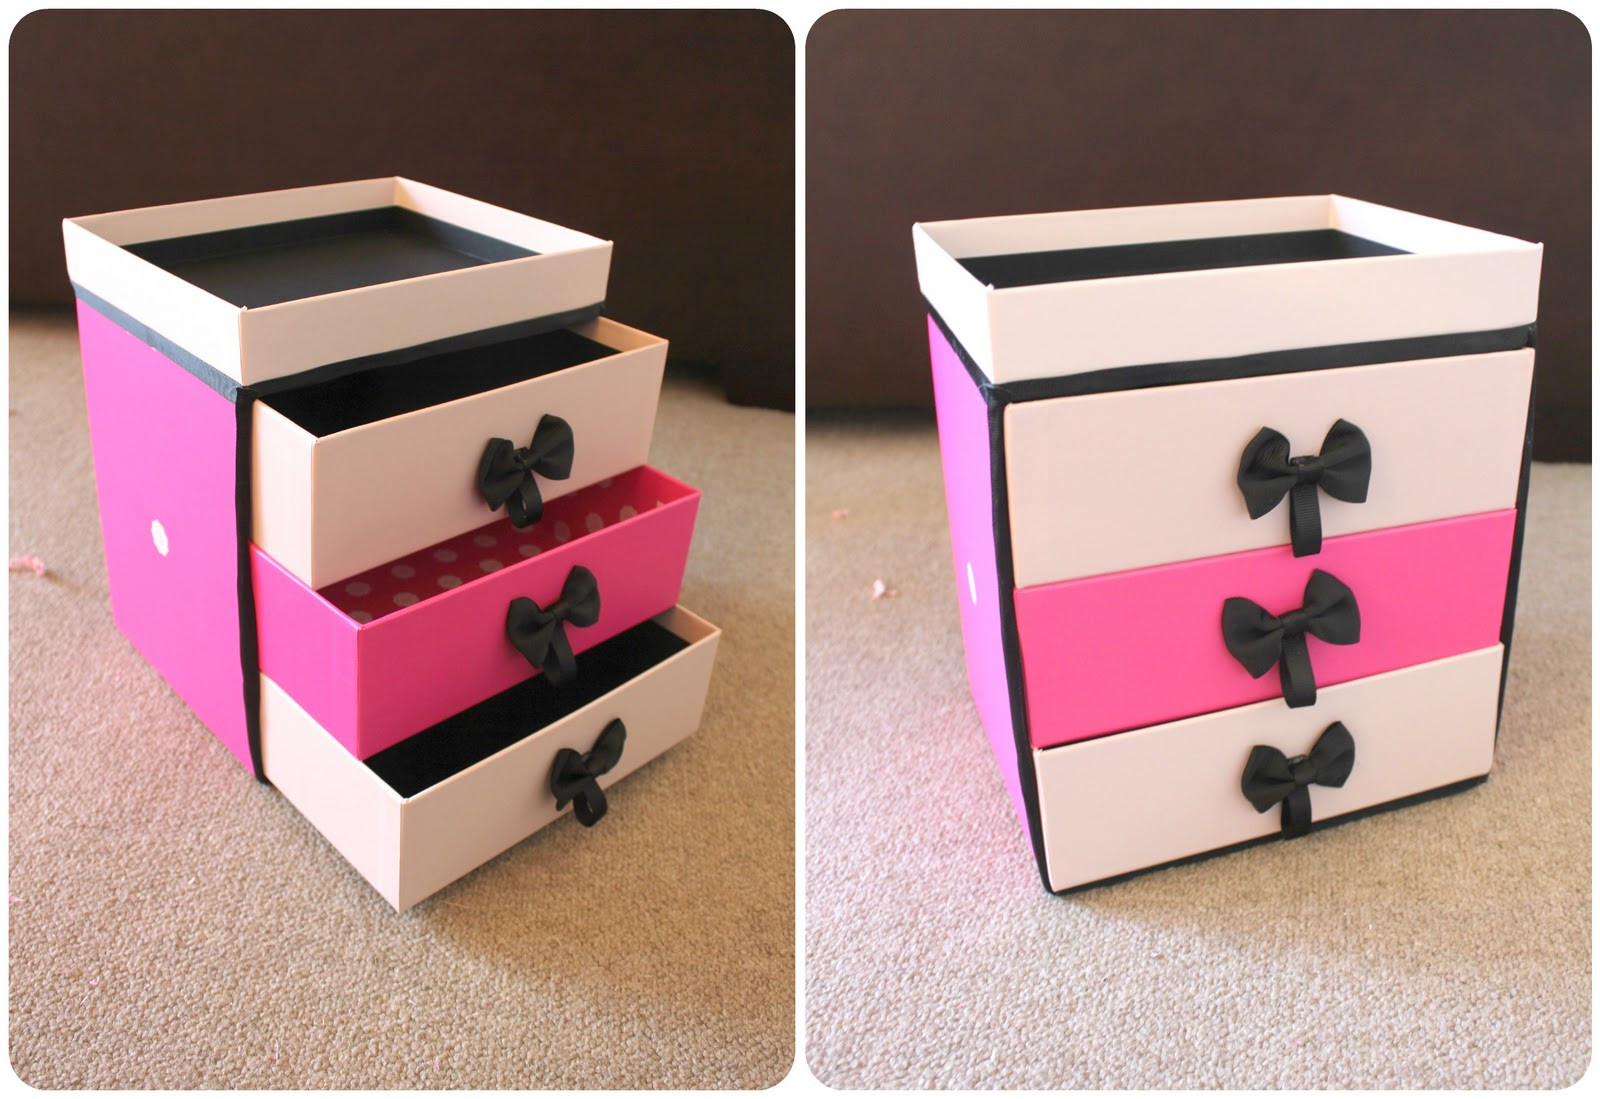 Best ideas about DIY Makeup Organizer Box
. Save or Pin Peachfizzz DIY Make Up Storage Now.